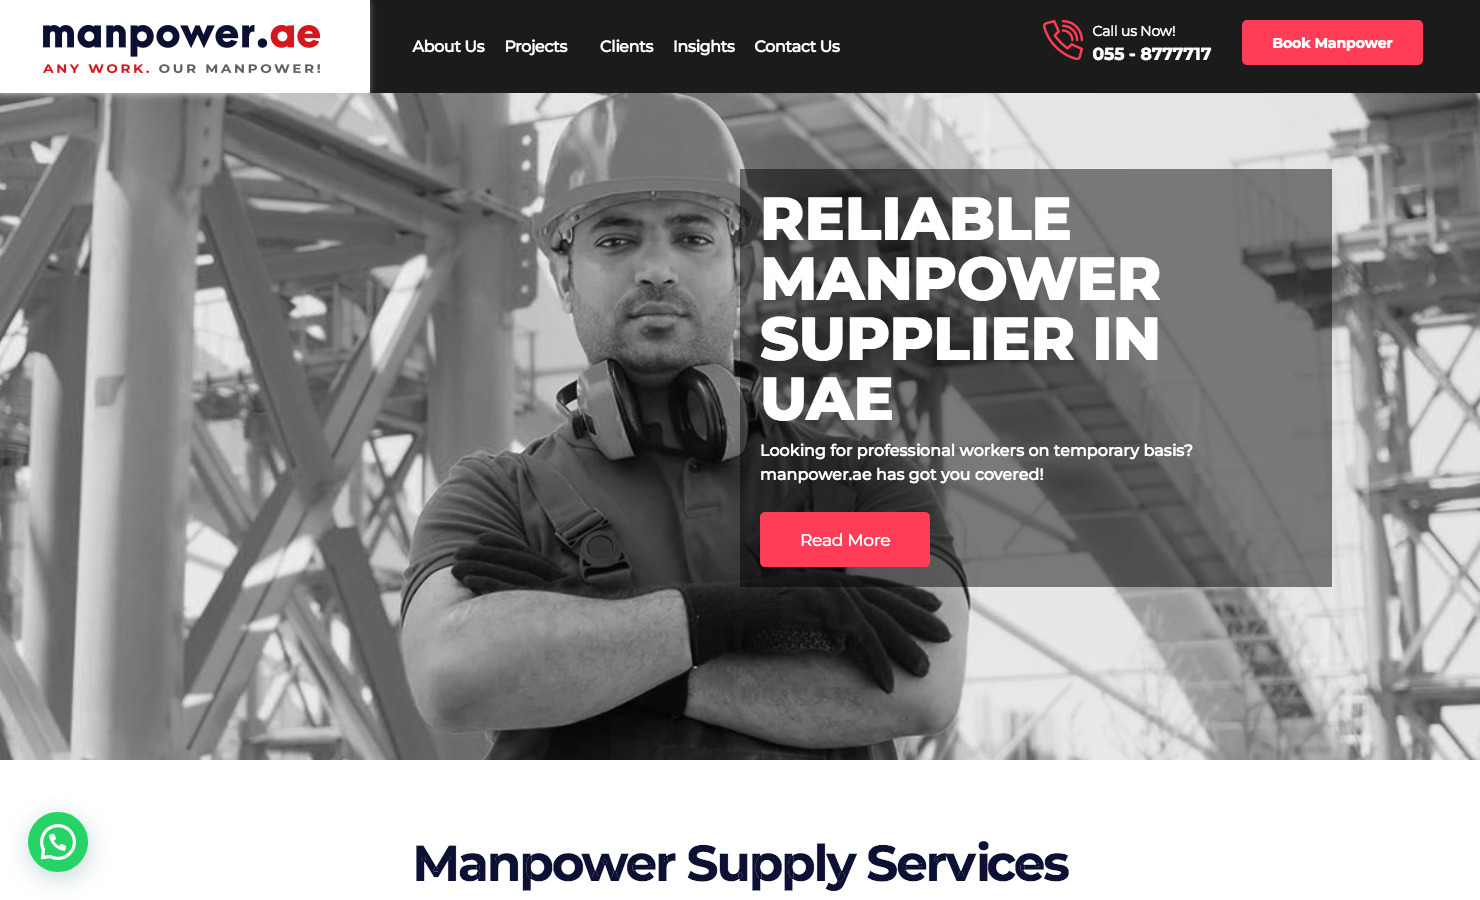 Manpower ae Manpower Supply